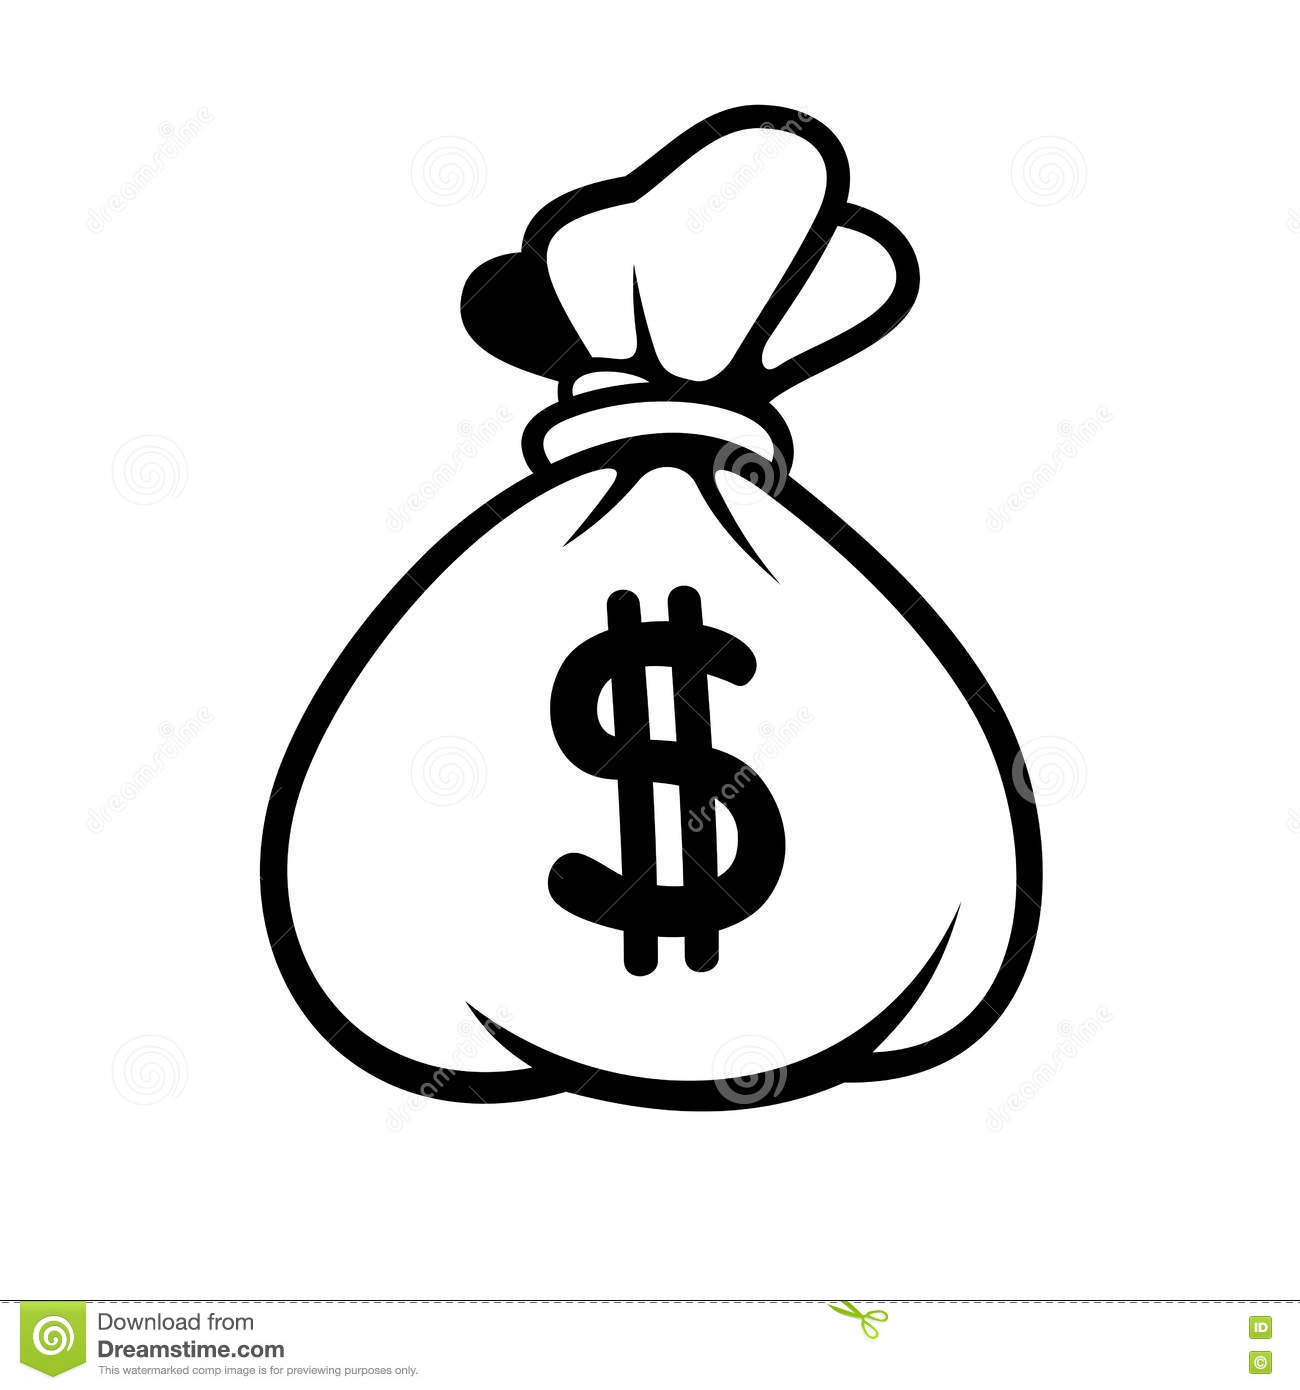 Dollar with Money Bag Vector Icon